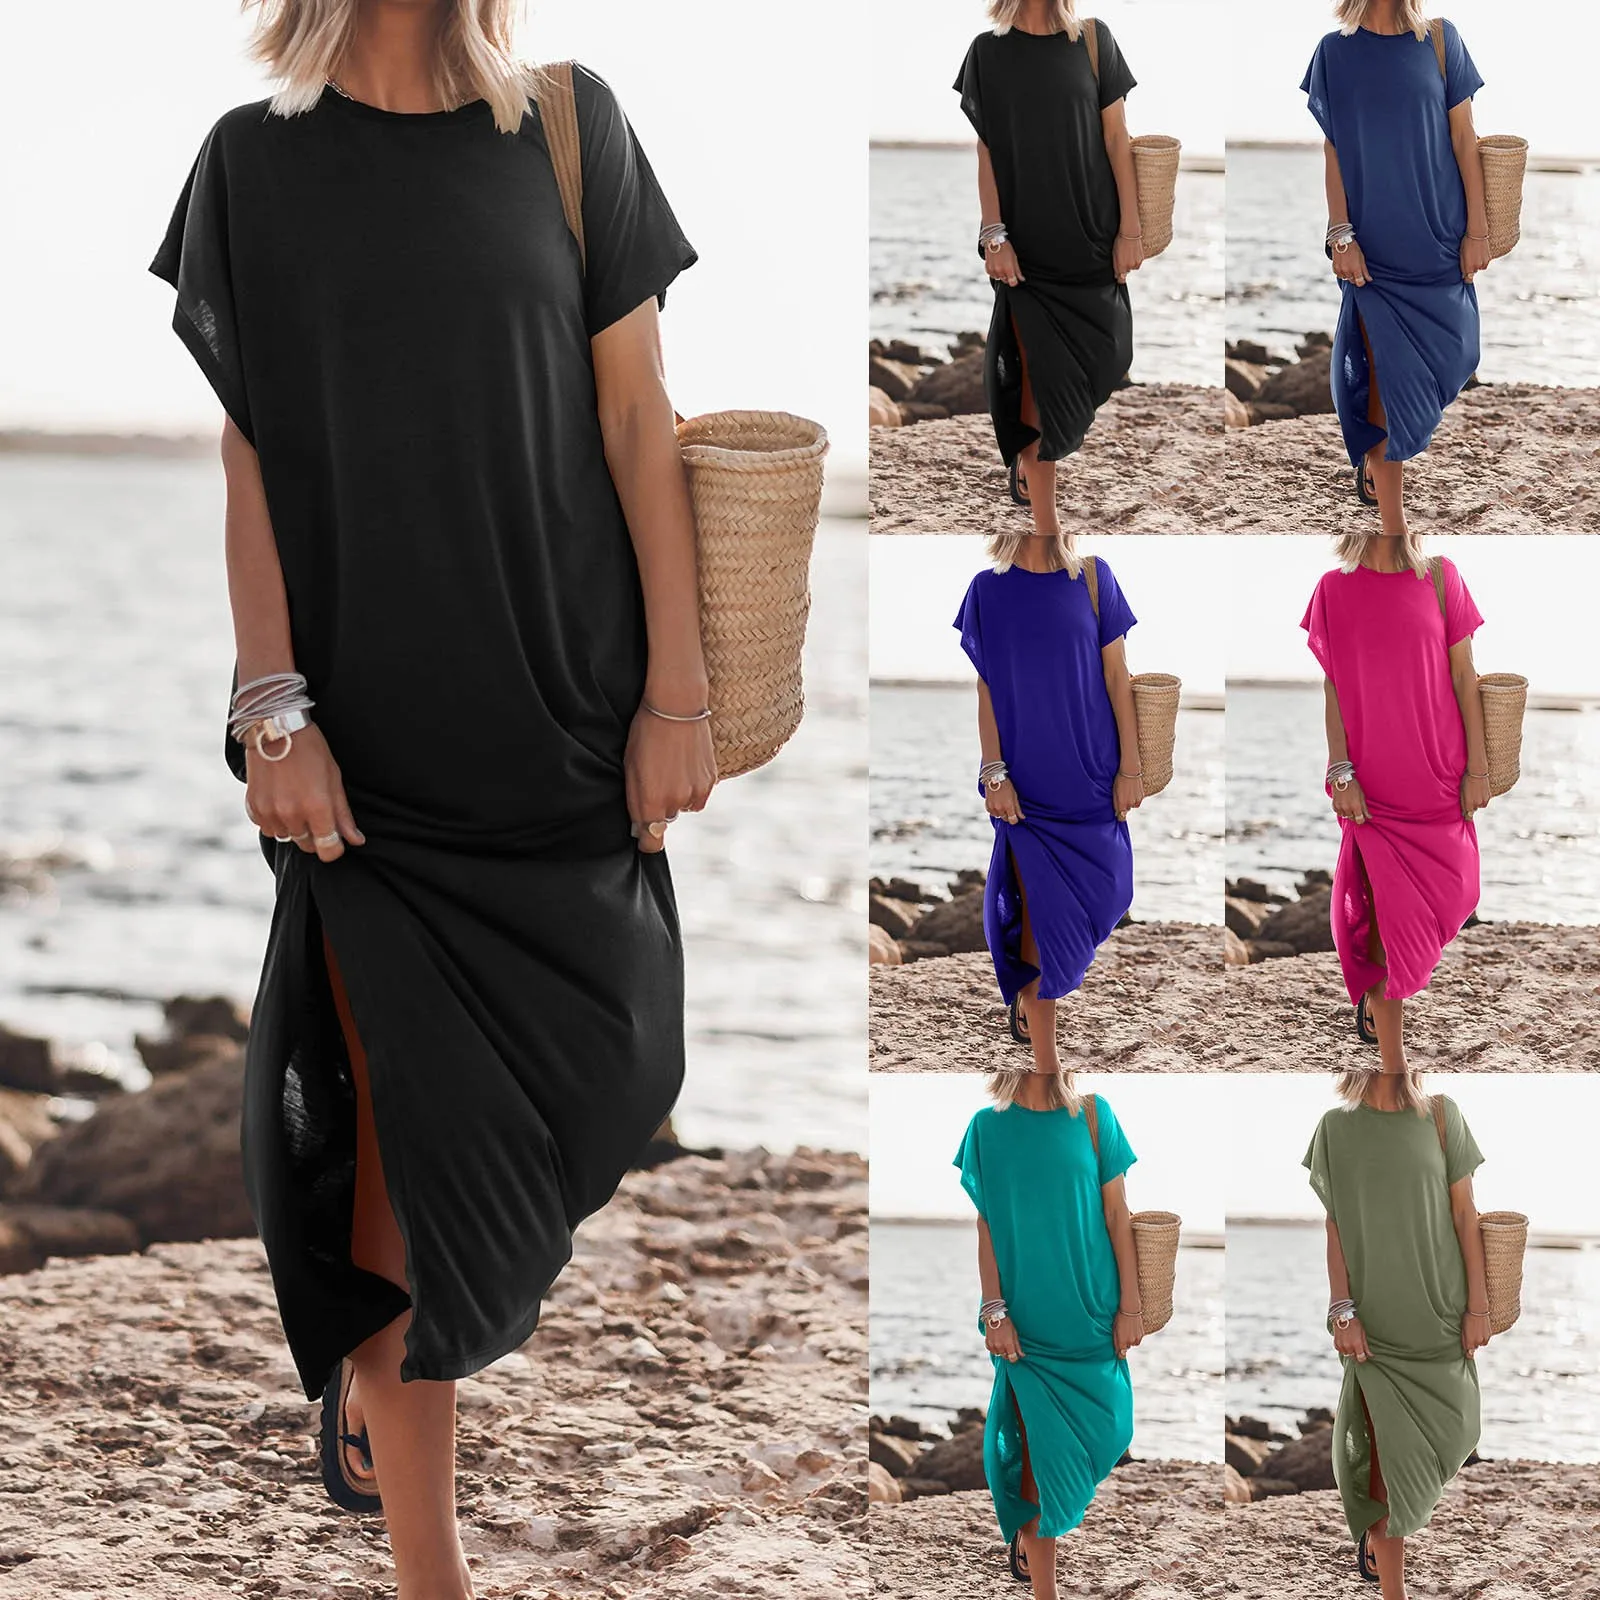 

Women's Summer Beach Maxi Dress Fashion Batwing Sleeve Crew Neck Casual Loose Slit Side Elegant Long Beach T Shirt Dresses